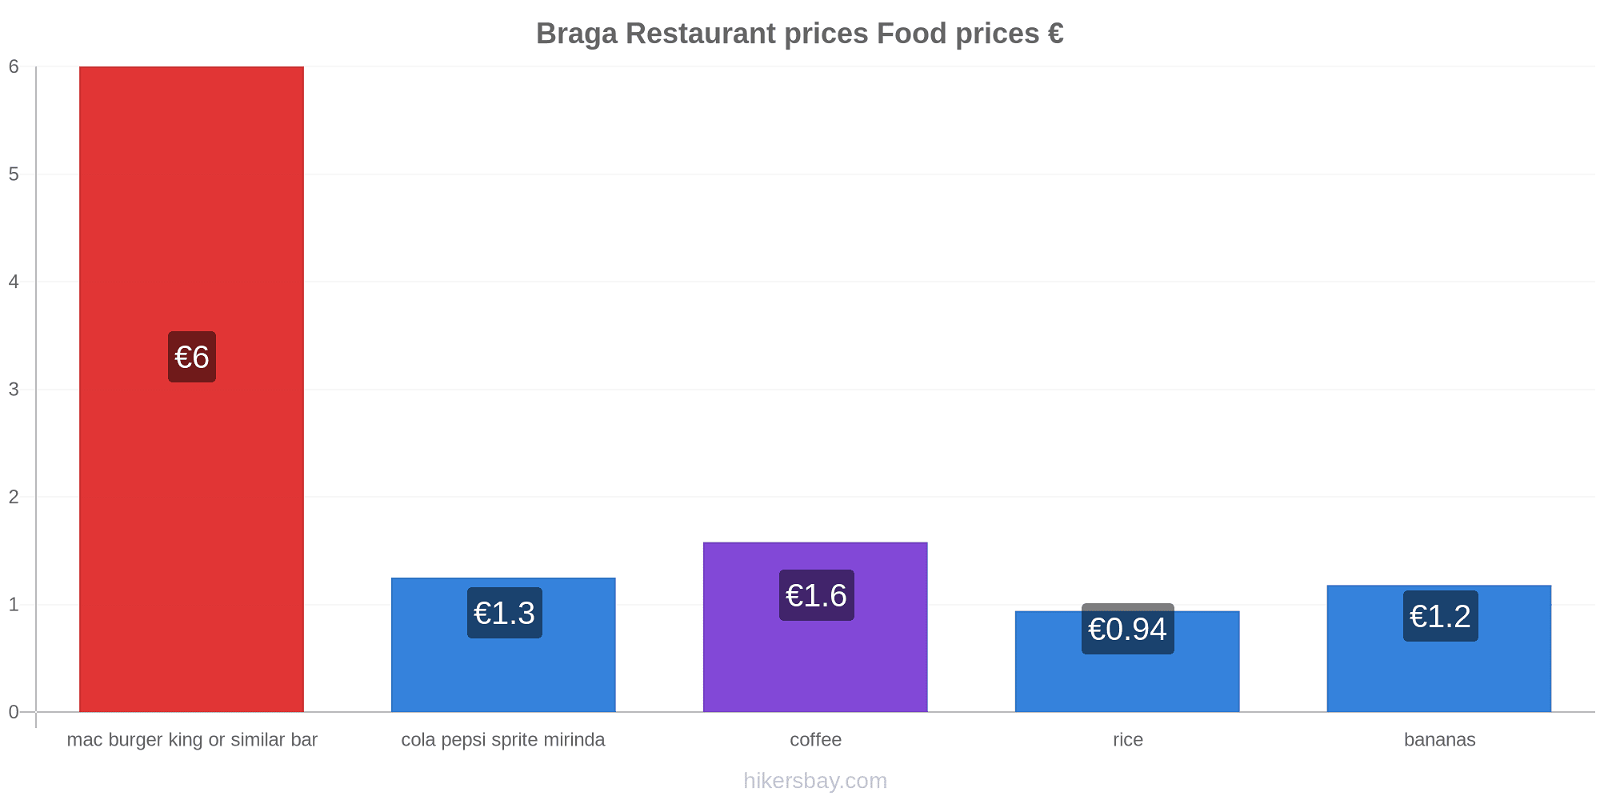 Braga price changes hikersbay.com